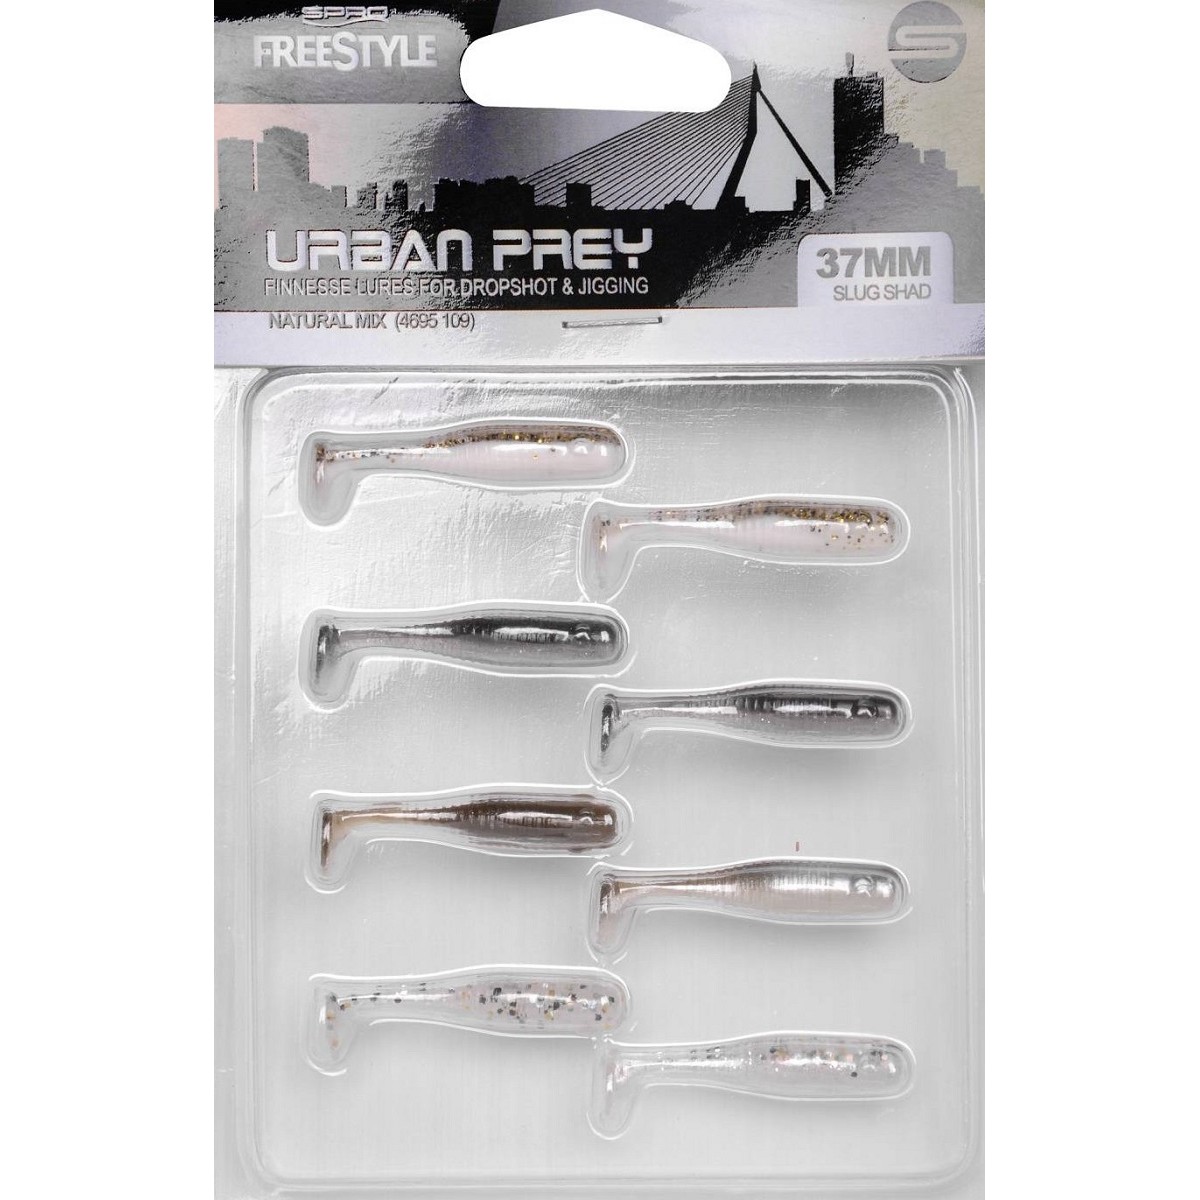 Комплект SPRO Freestyle Urban Prey Micro Slug 37mm Natural Mix